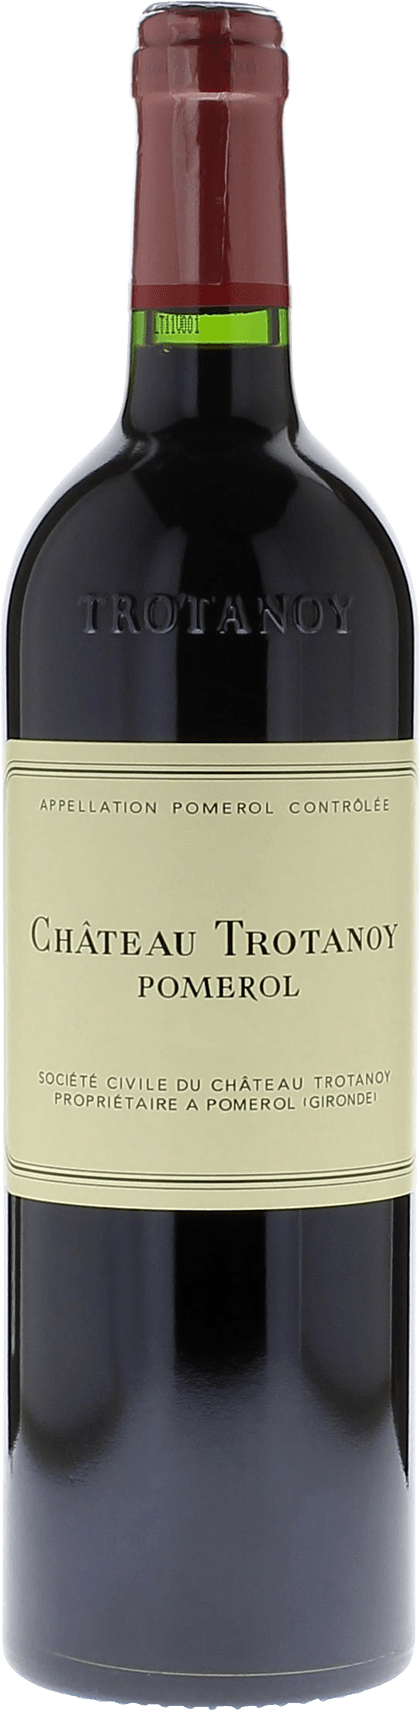 Trotanoy 2005  Pomerol, Bordeaux rouge